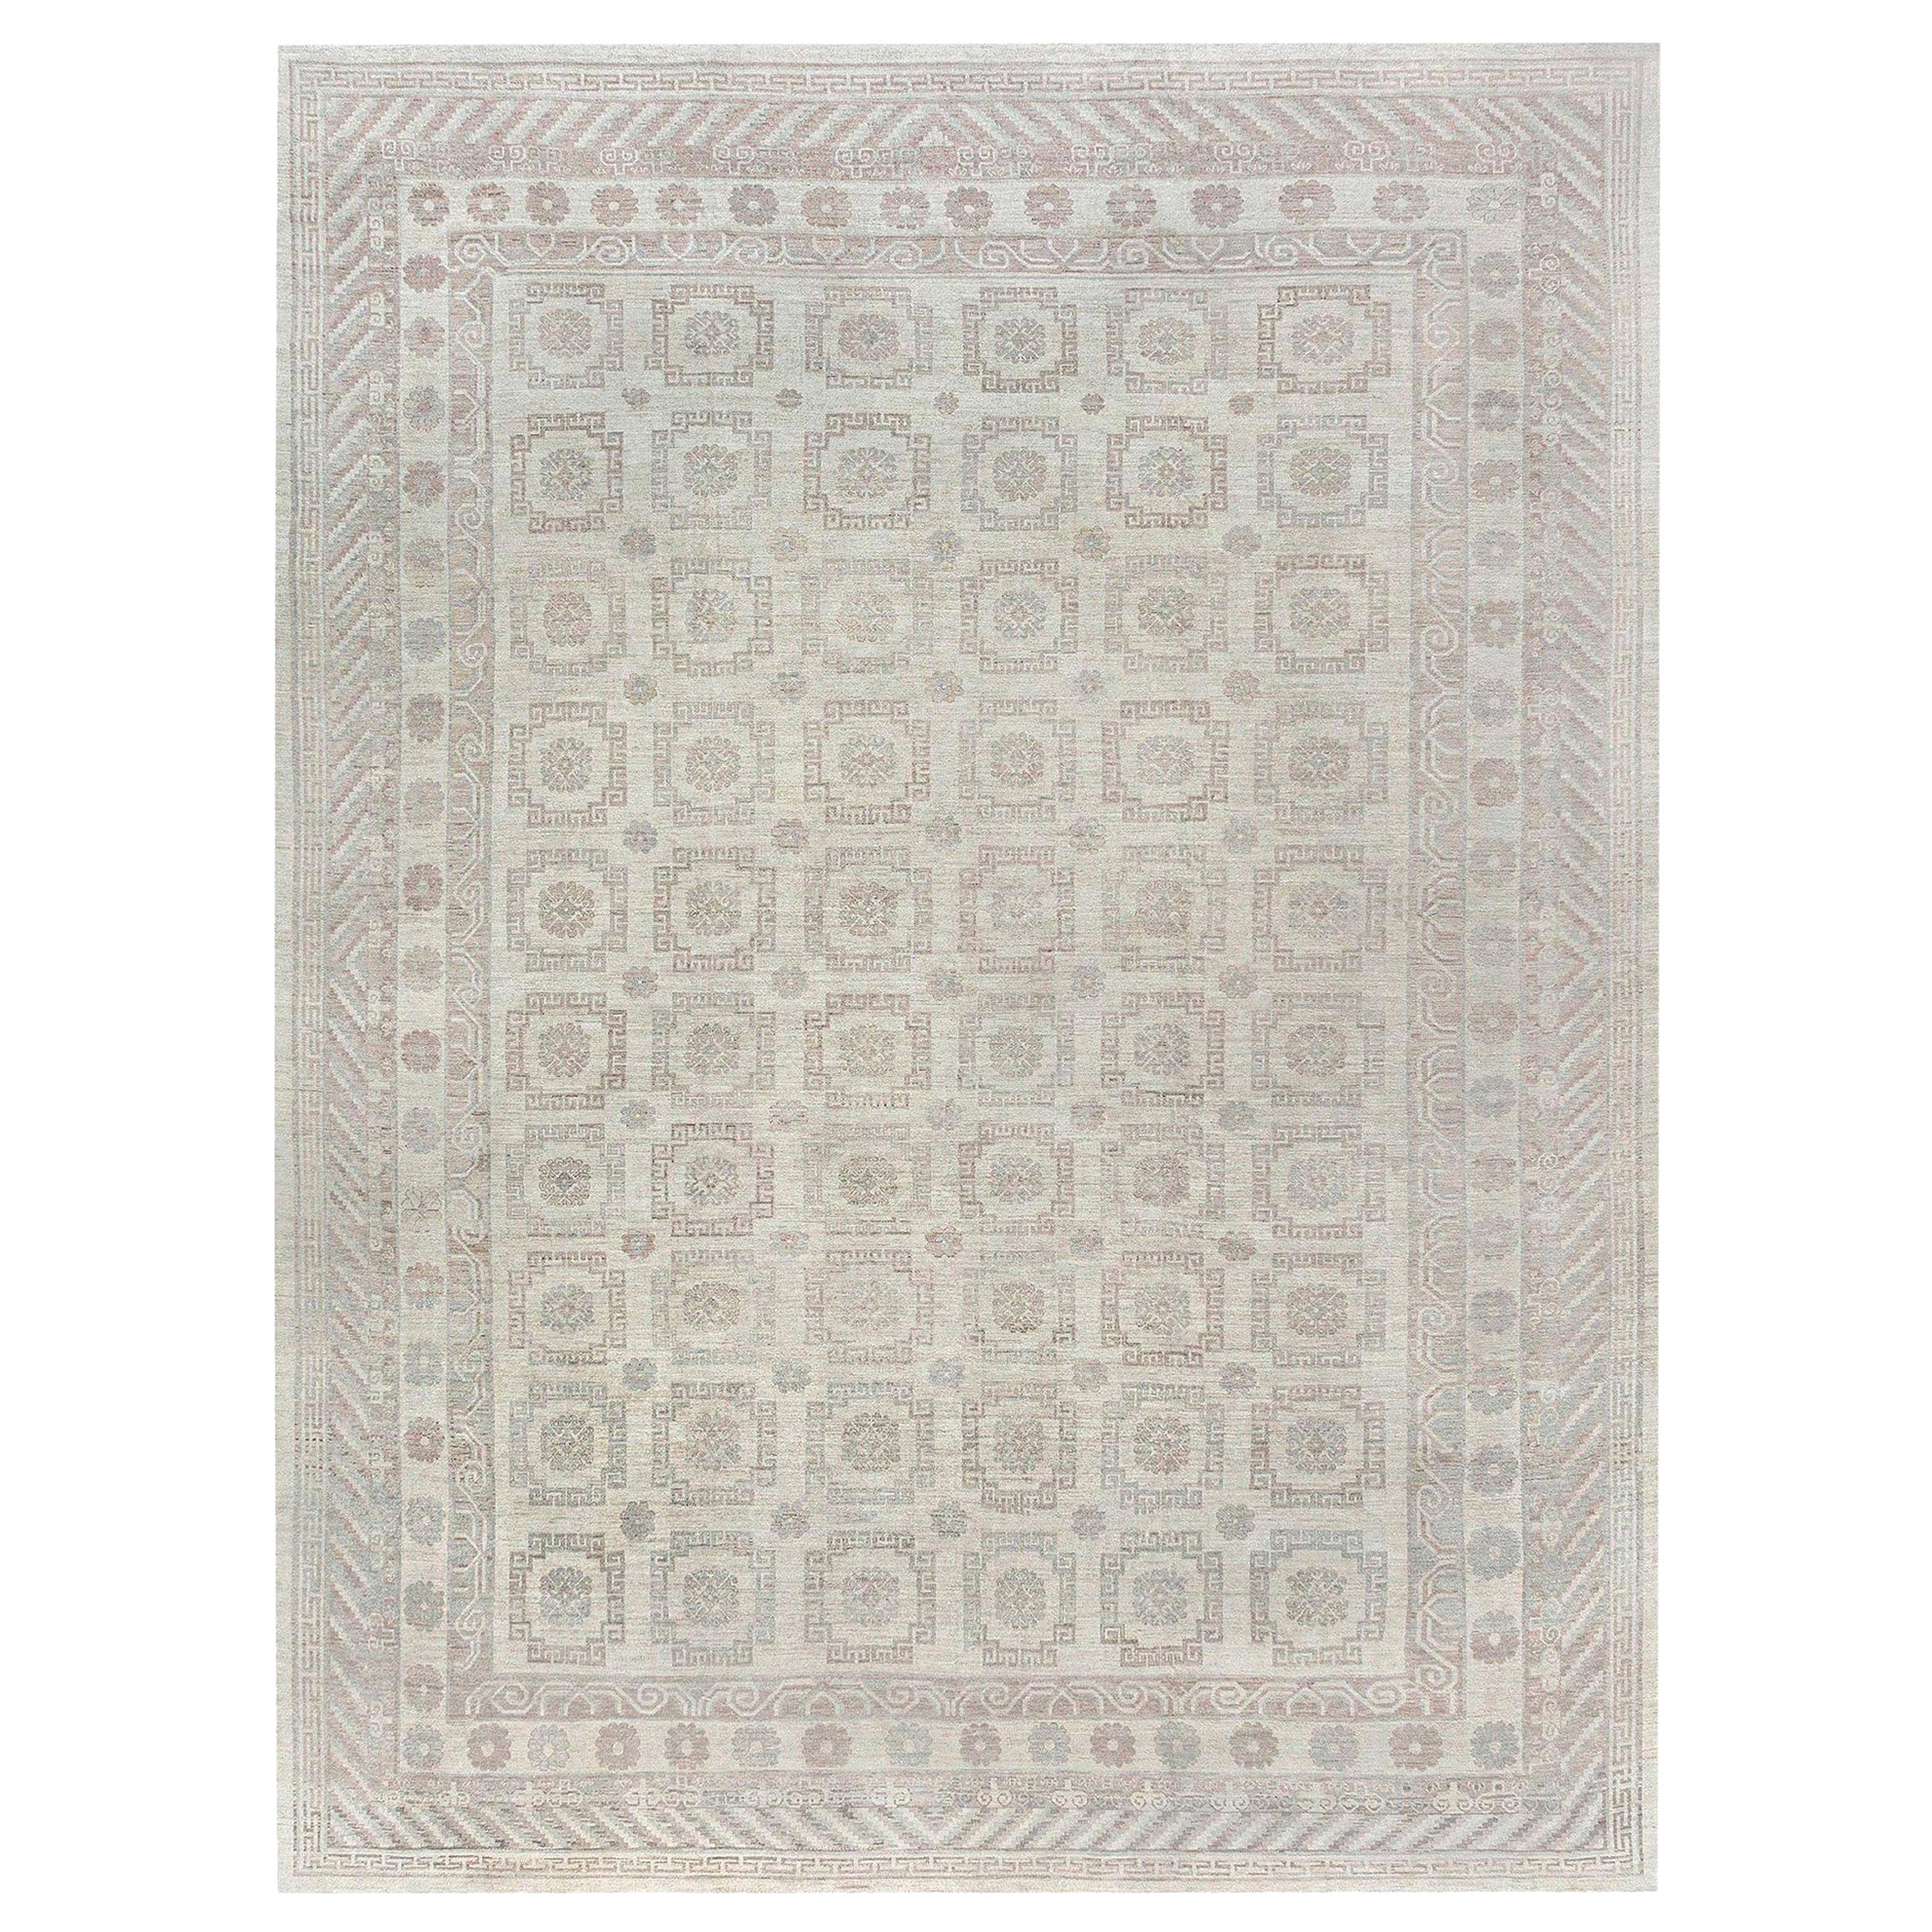 Large Samarkand Style Geometric Handmade Wool Rug by Doris Leslie Blau For Sale